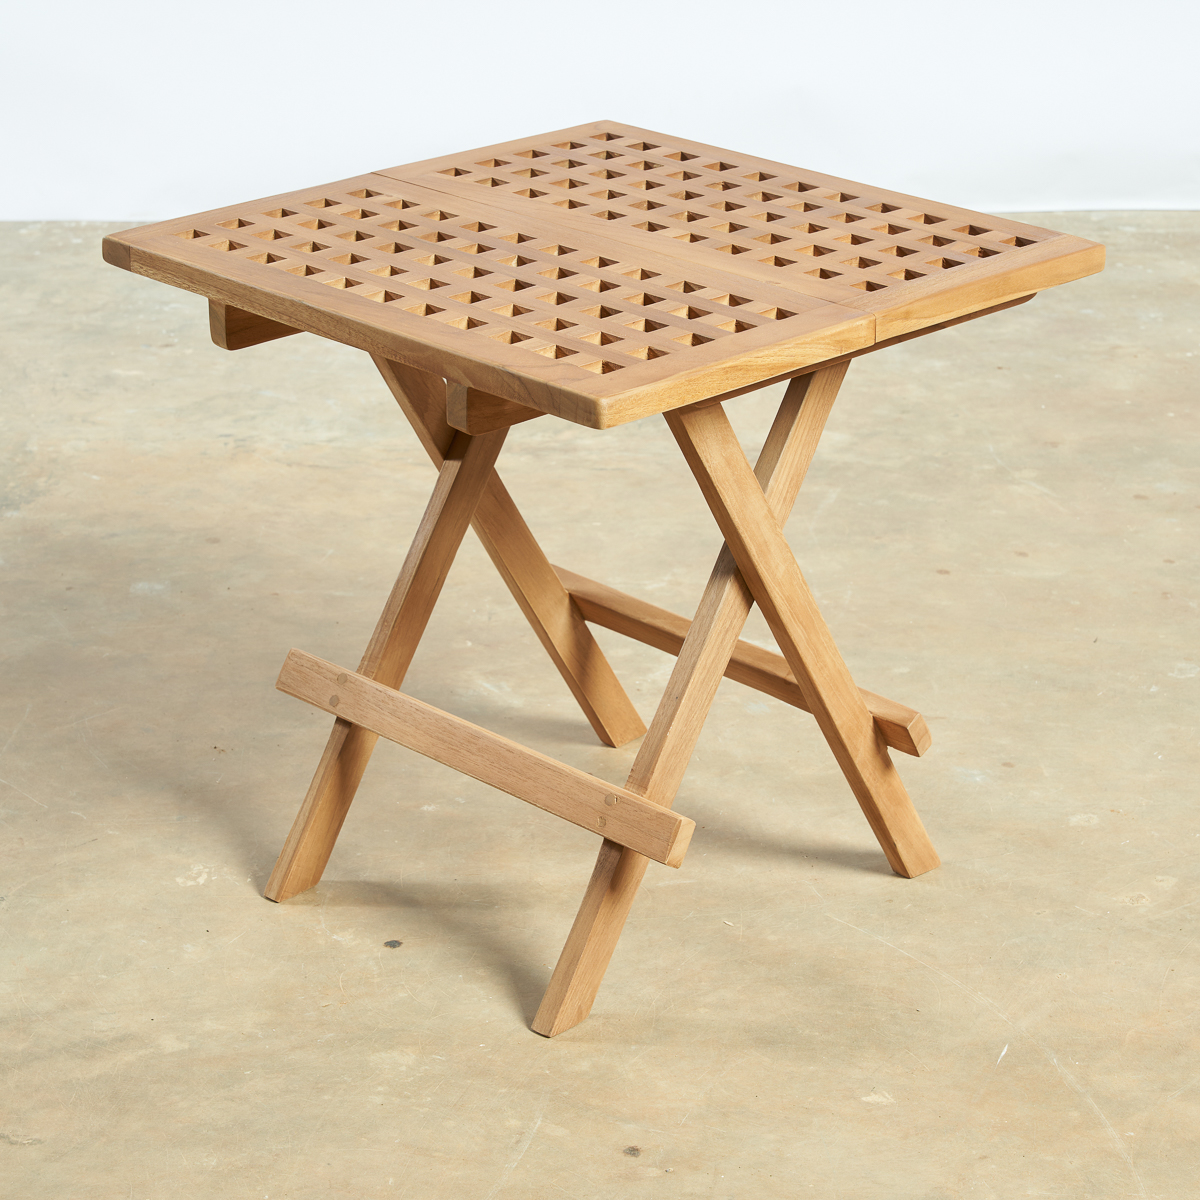 Table basse pliante Picnic 50 x 50 cm en teck huilé - wood-en-stock